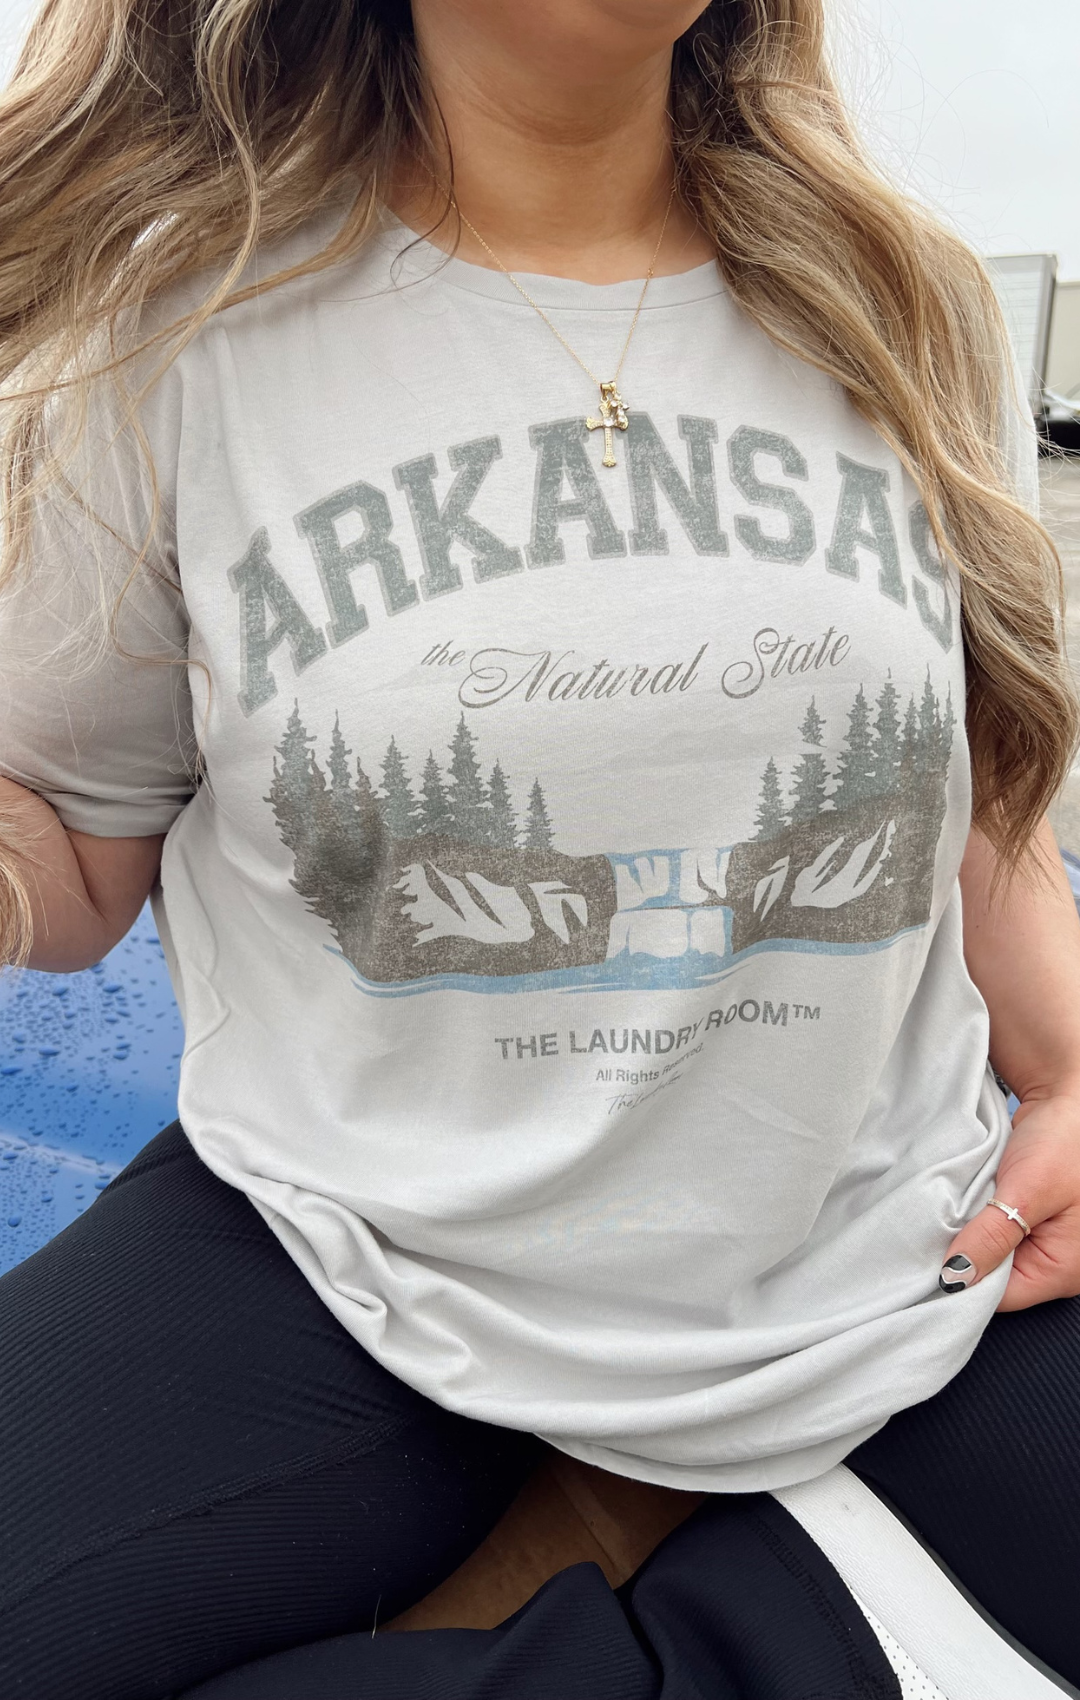 The Arkansas Natural State Tee